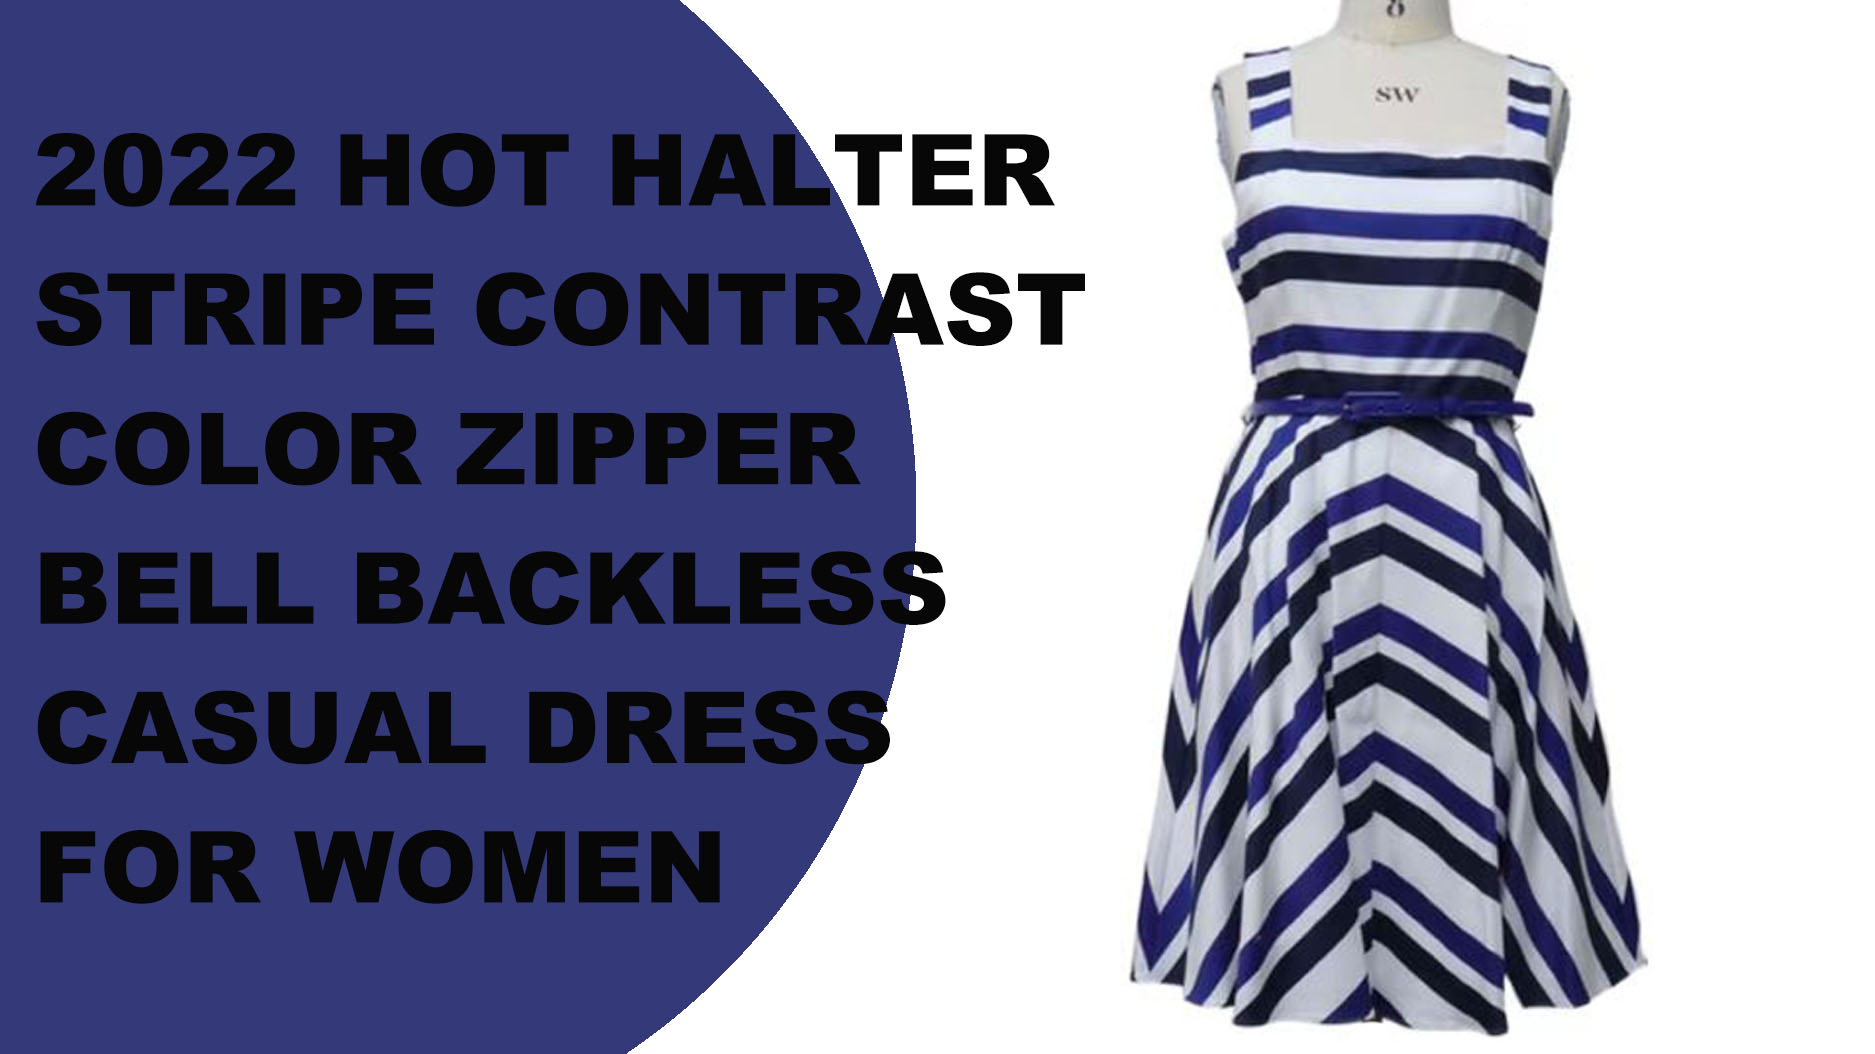 2022 Hot Halter Stripe ContrastสีซิปBell backlessชุดลำลองสำหรับผู้หญิง